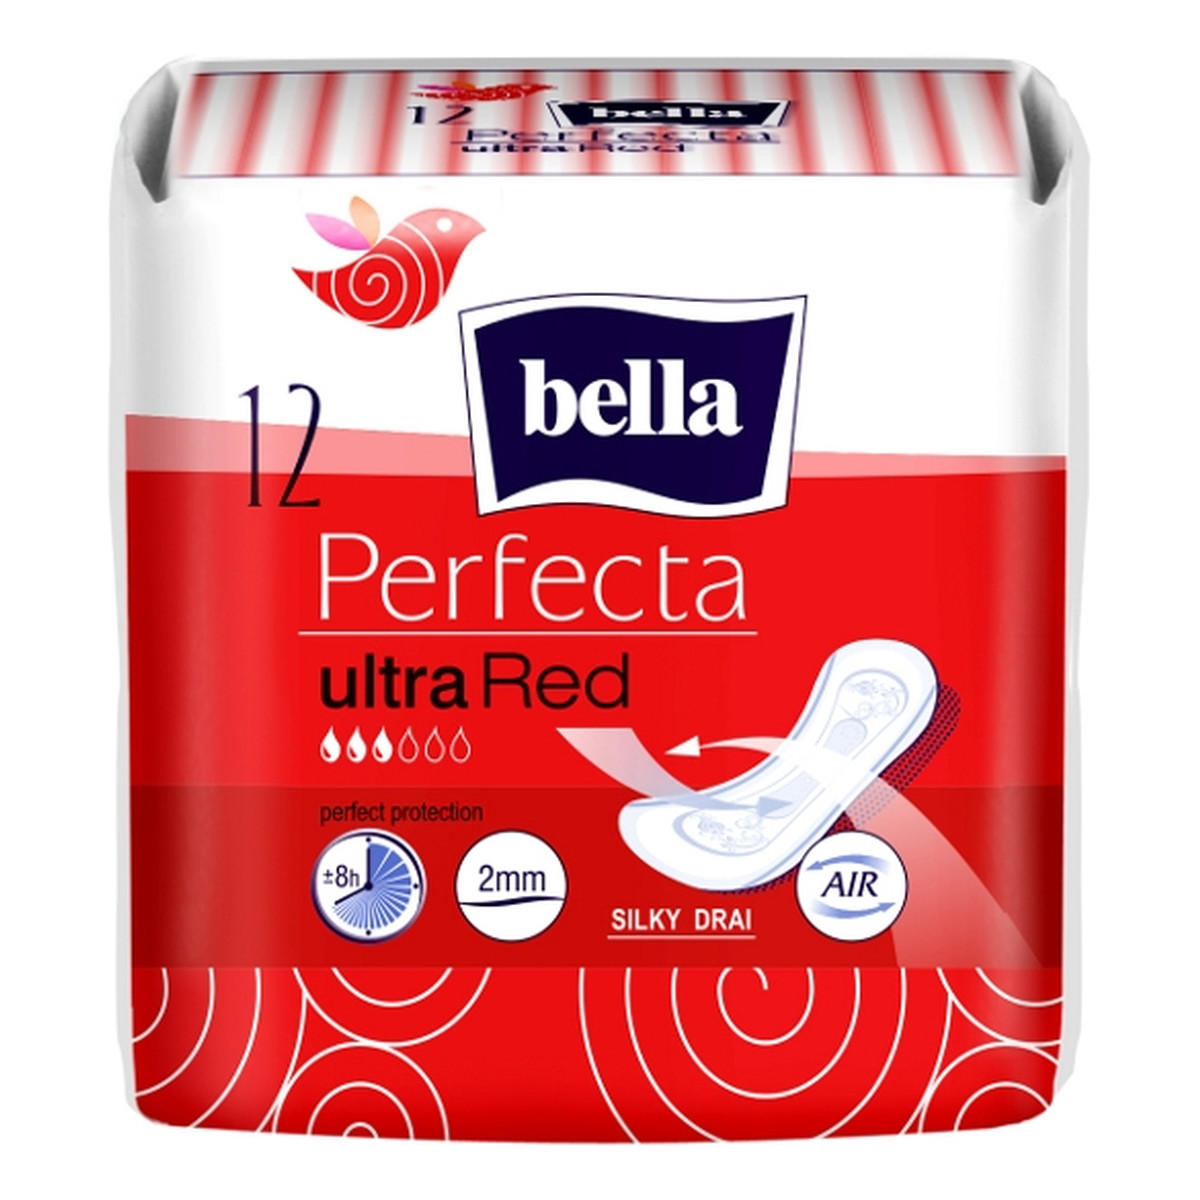 Bella Ultra Red Perfecta Podpaski Higieniczne 12 Sztuk